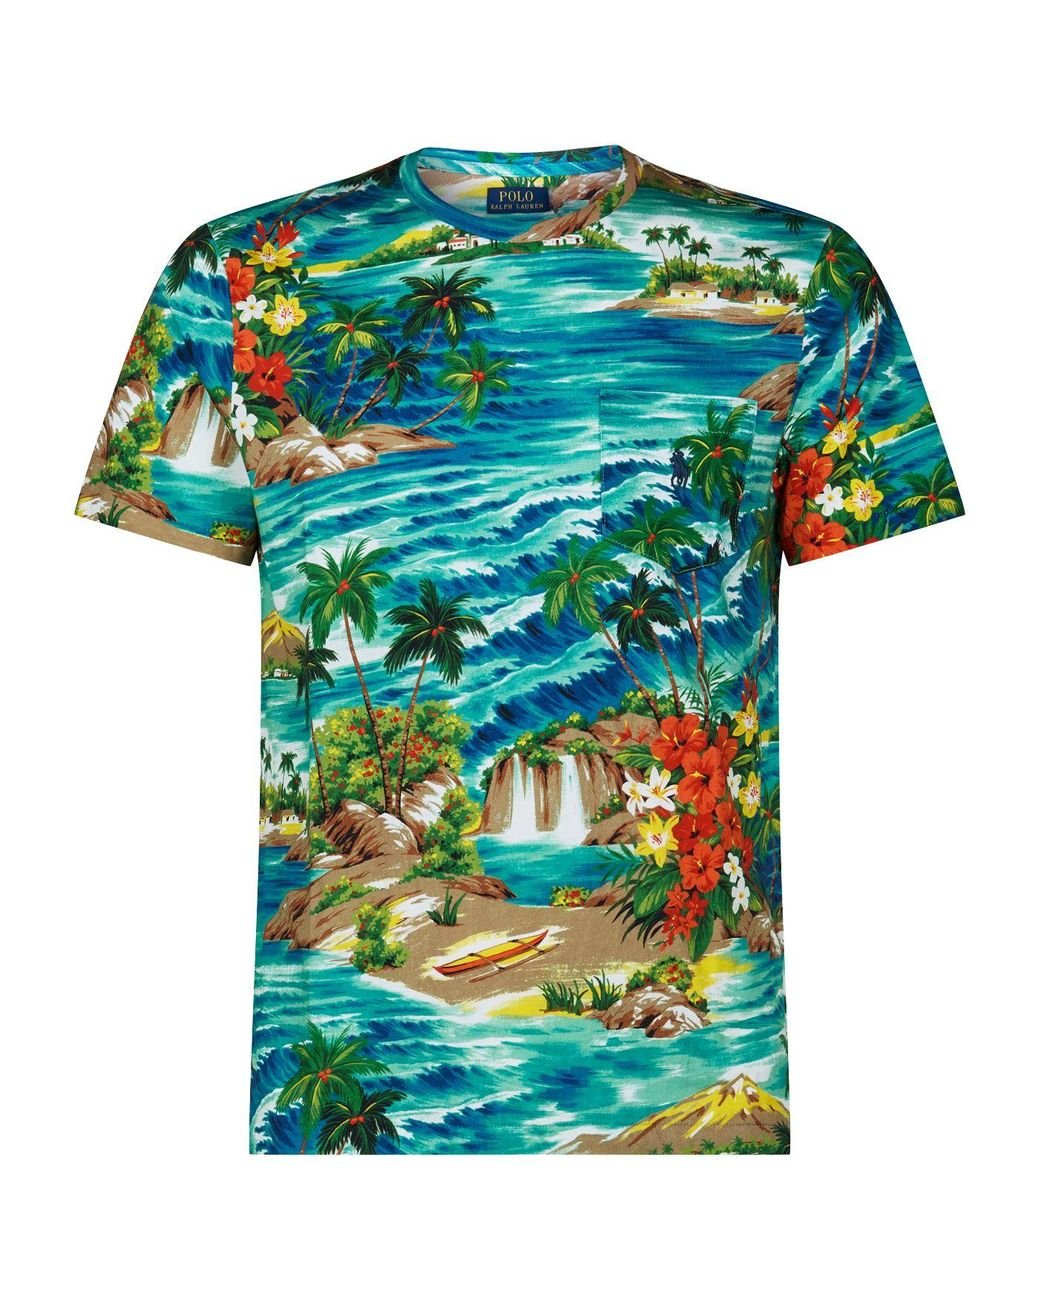 Aprender acerca 49+ imagen polo ralph lauren hawaiian t shirt